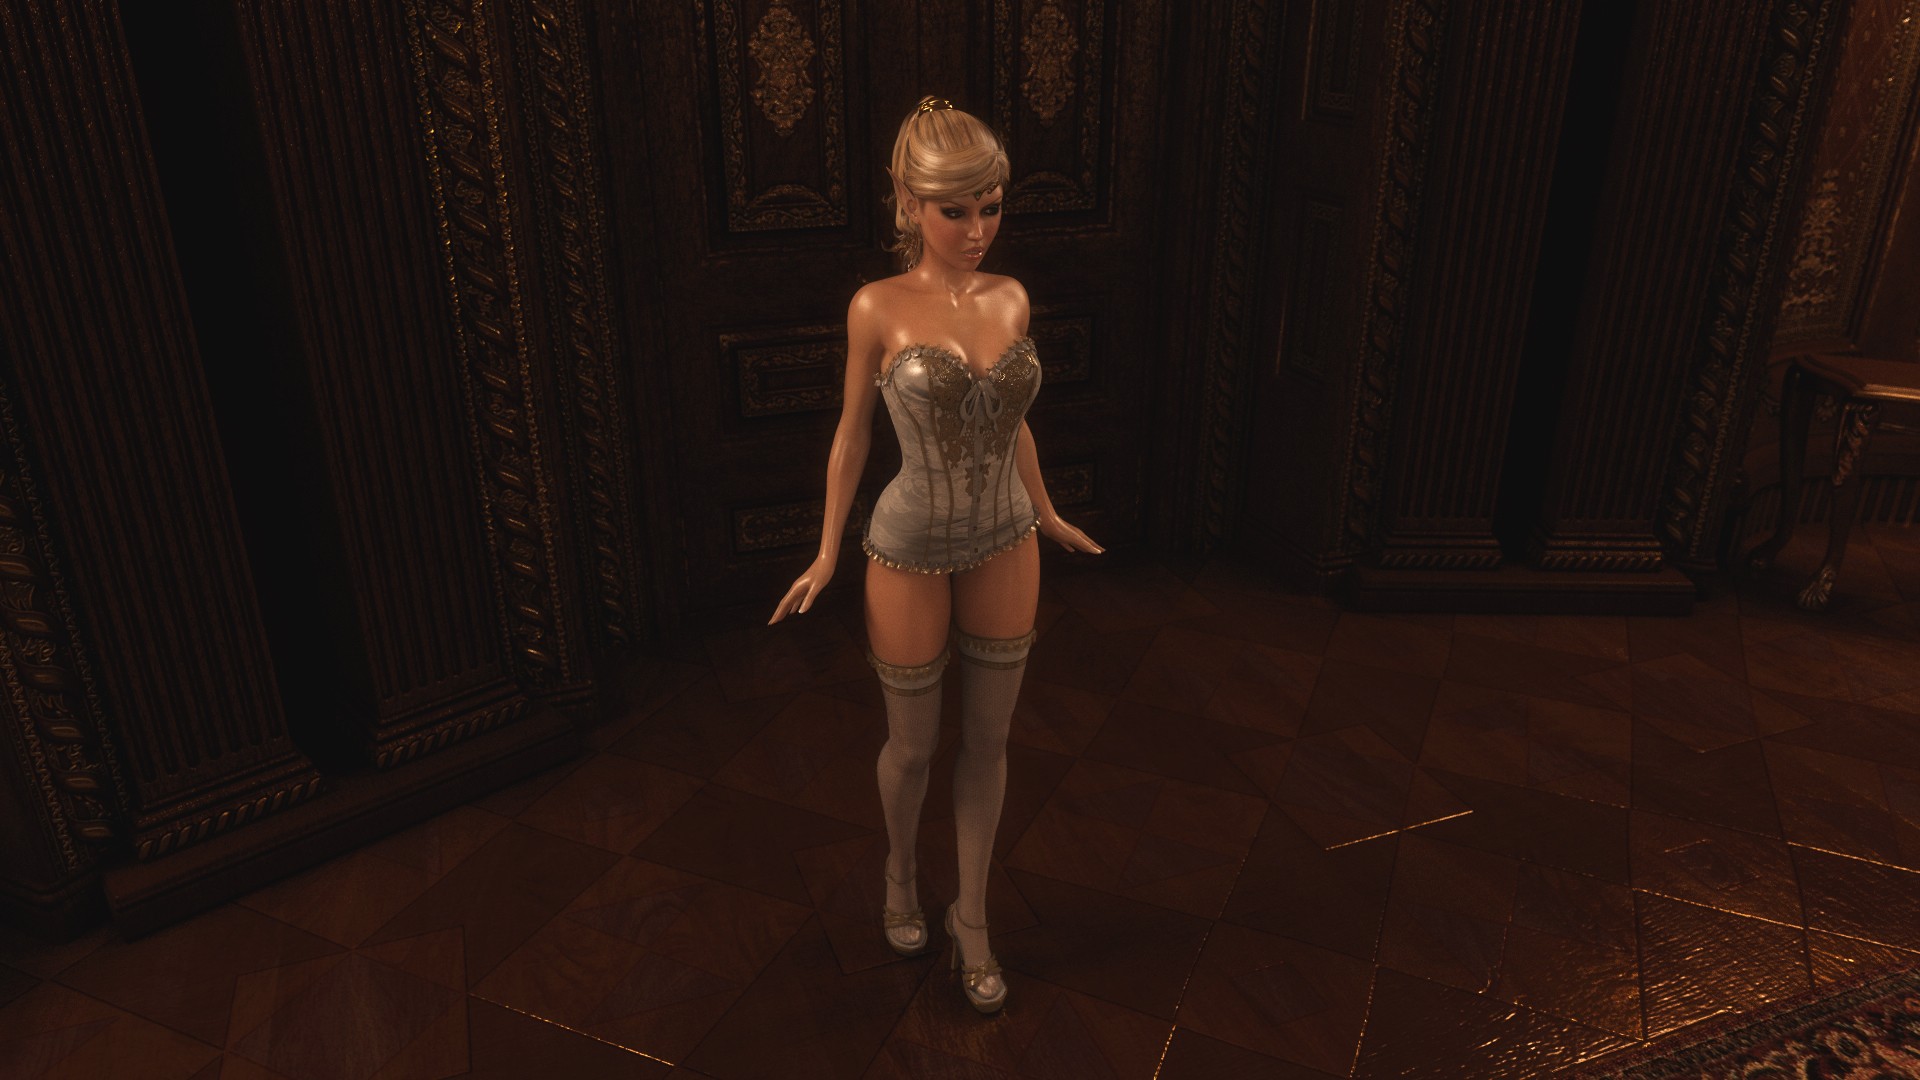 General 1920x1080 elves stockings 3dx CGI digital art blonde fantasy art fantasy girl standing